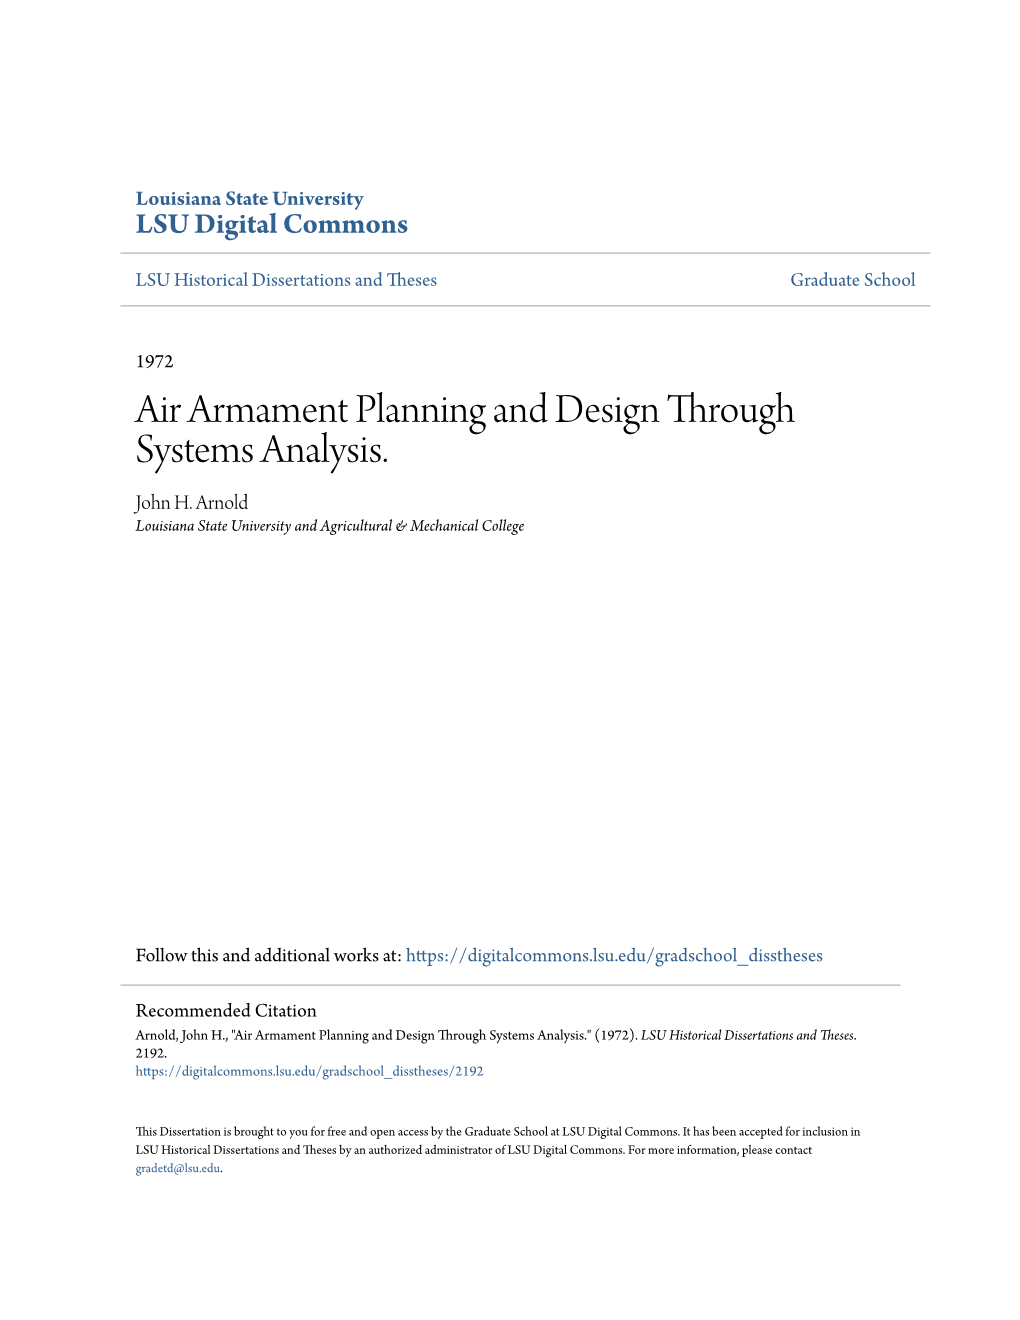 Air Armament Planning and Design Through Systems Analysis. John H